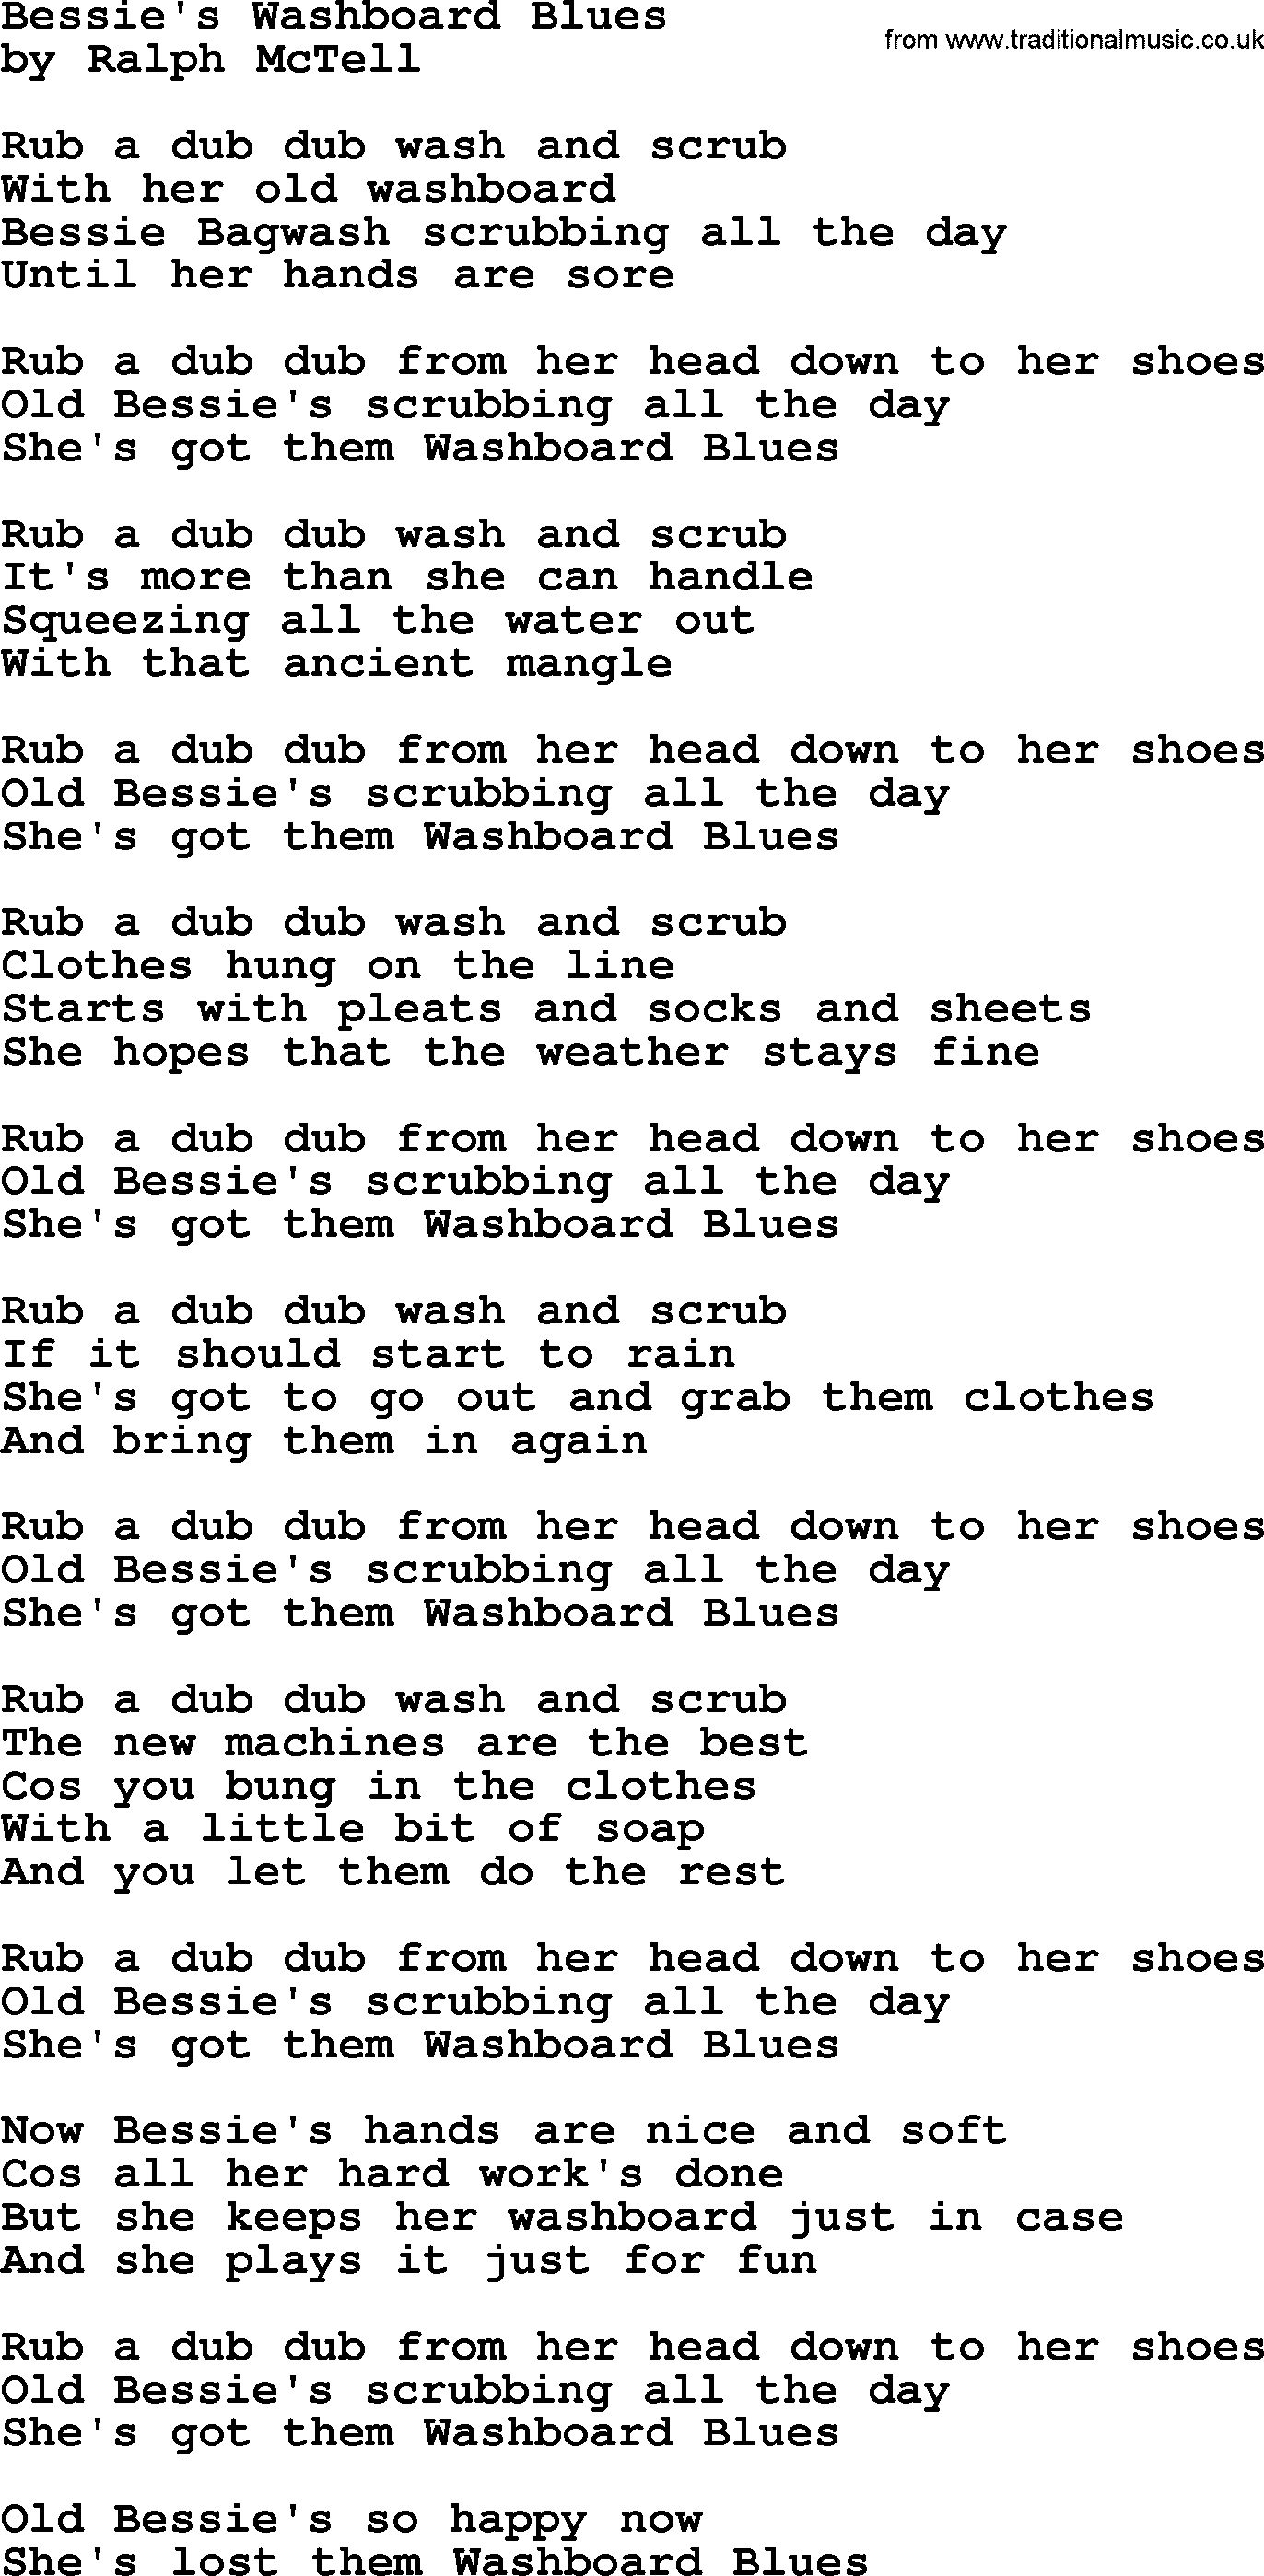 Ralph McTell Song: Bessie's Washboard Blues, lyrics